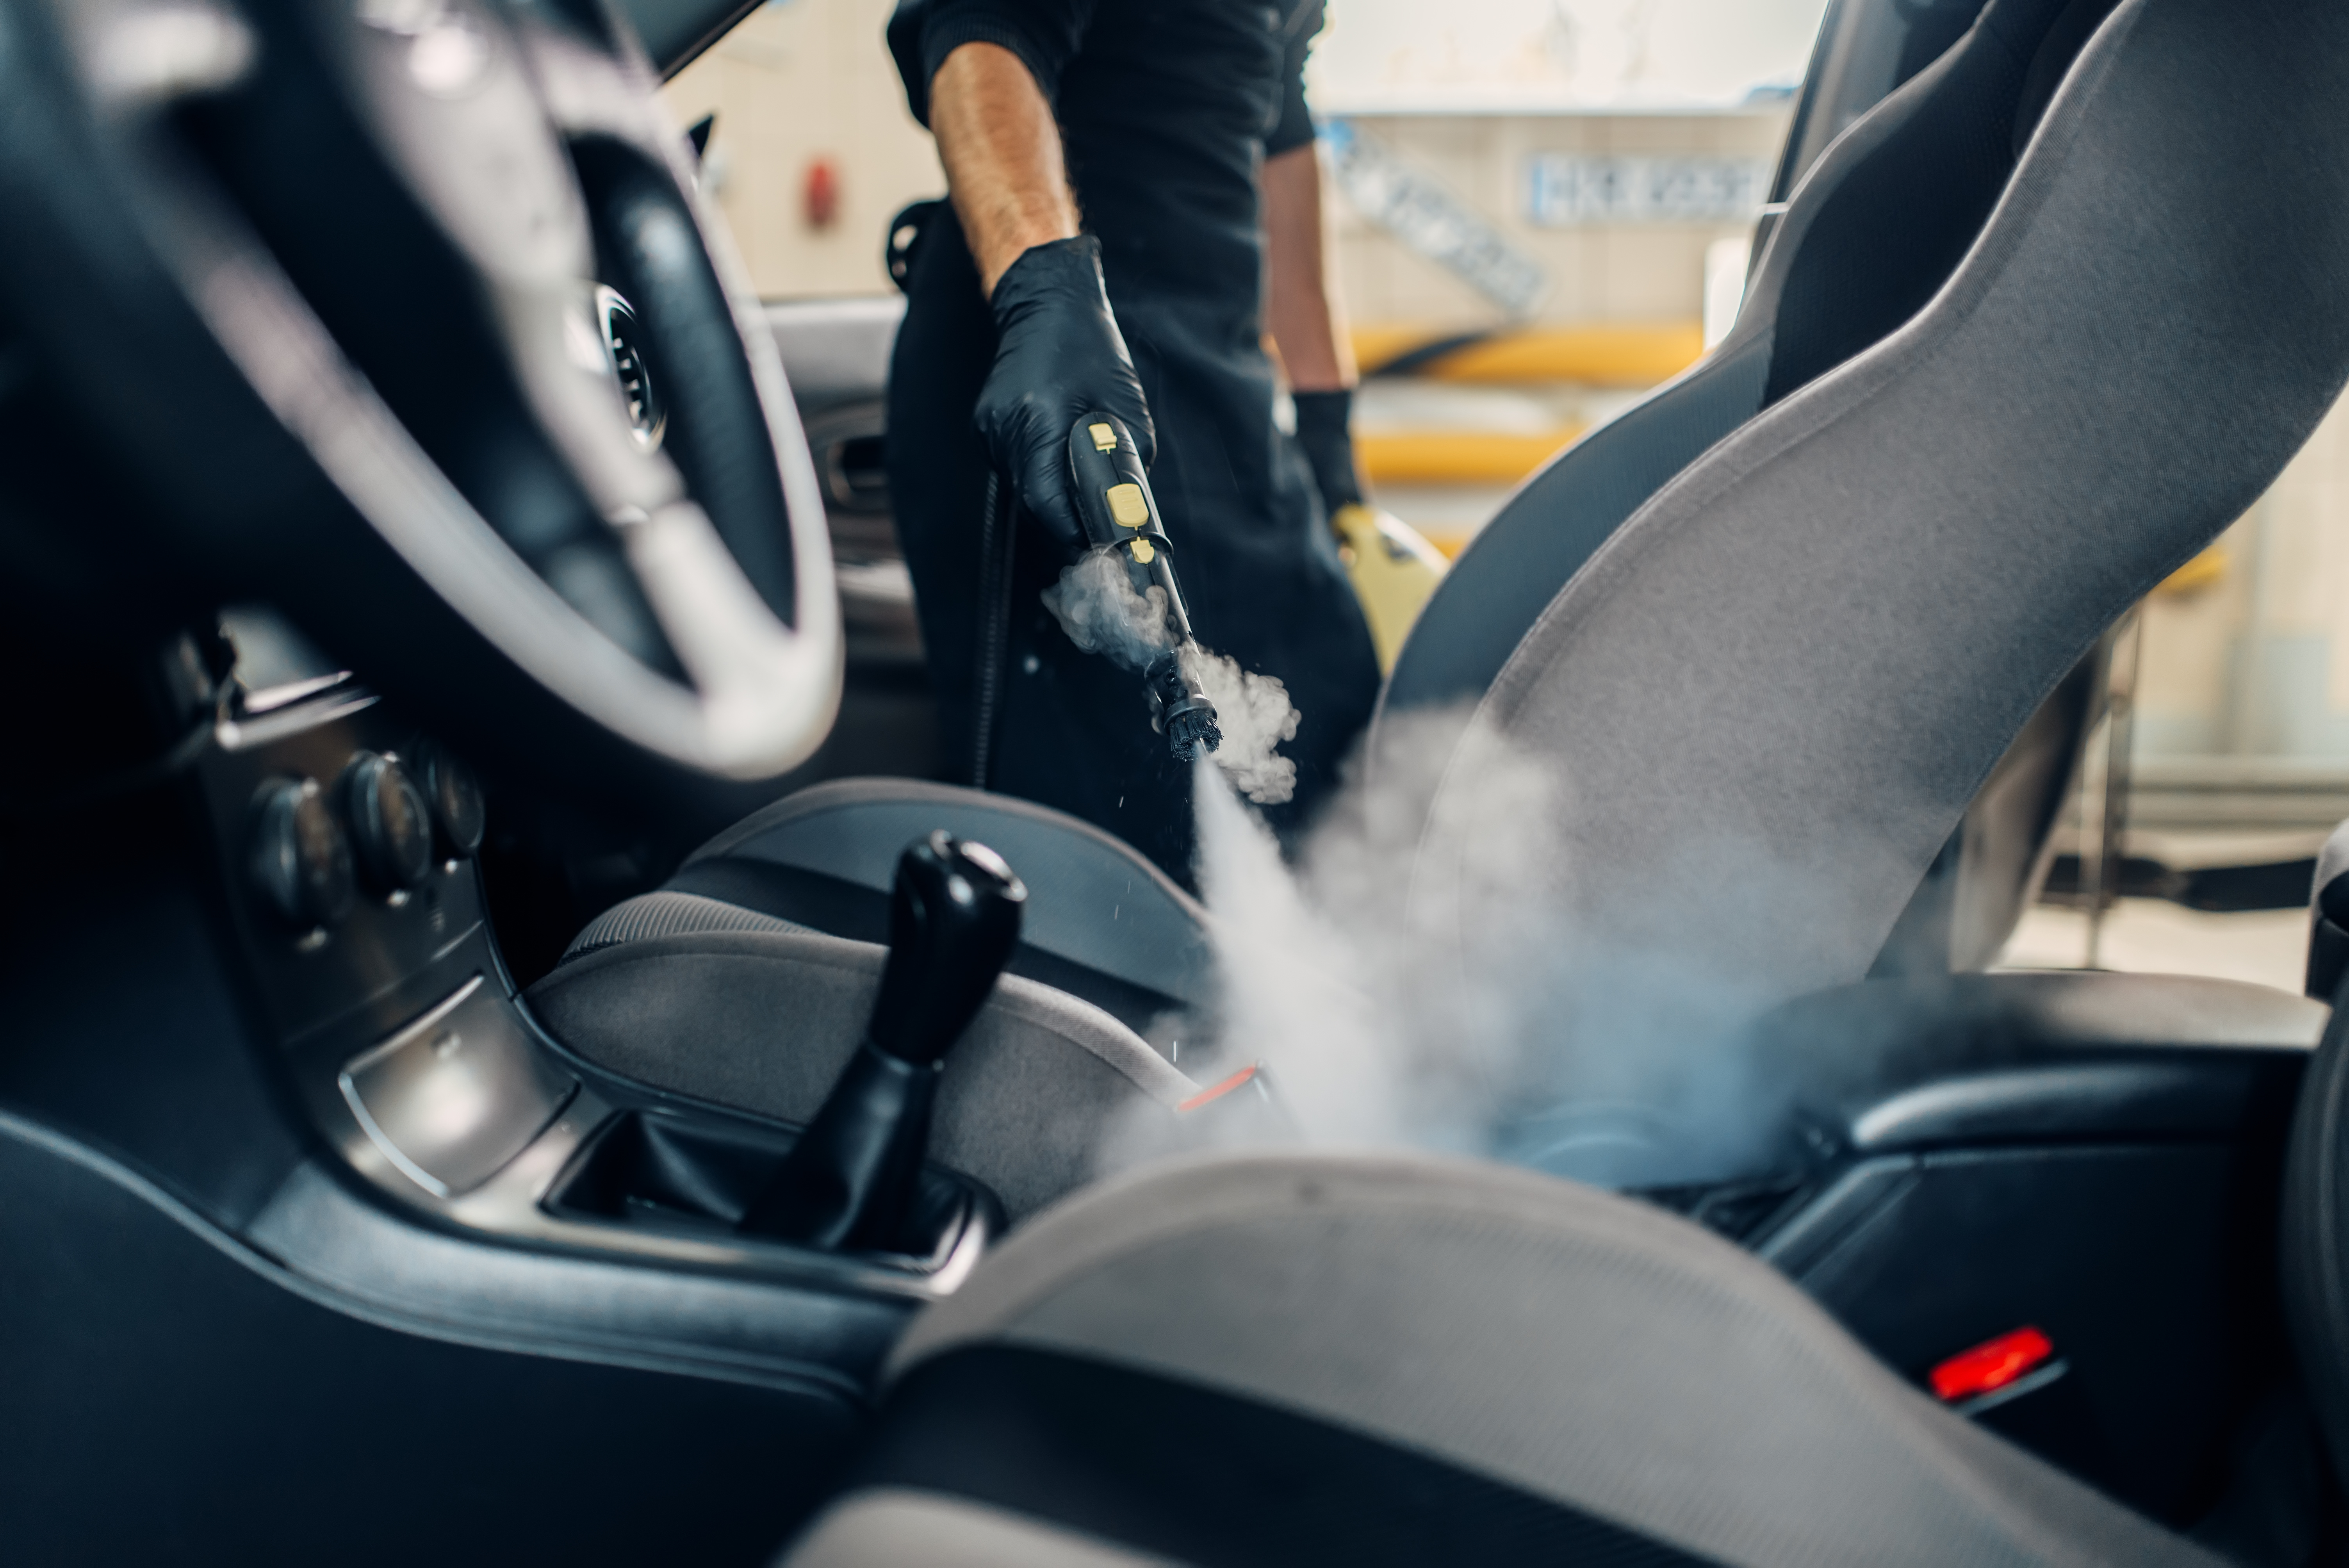 Dezinfekcija ozonom jamči čist i siguran automobil